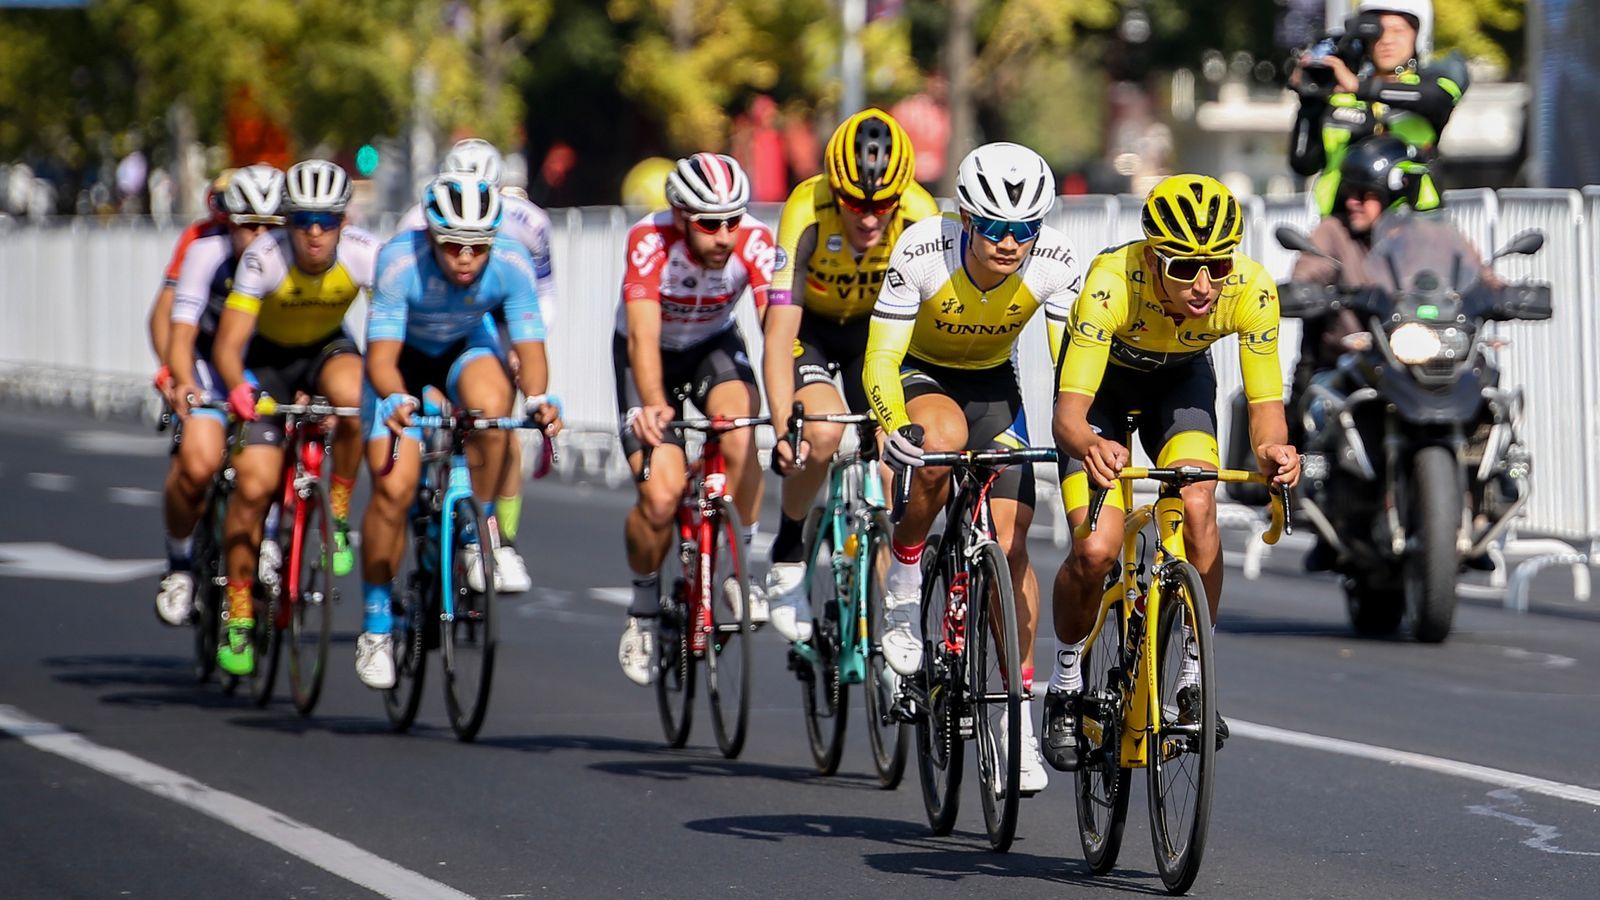 Tour de France 2021 to begin in Brittany after Denmark postponement